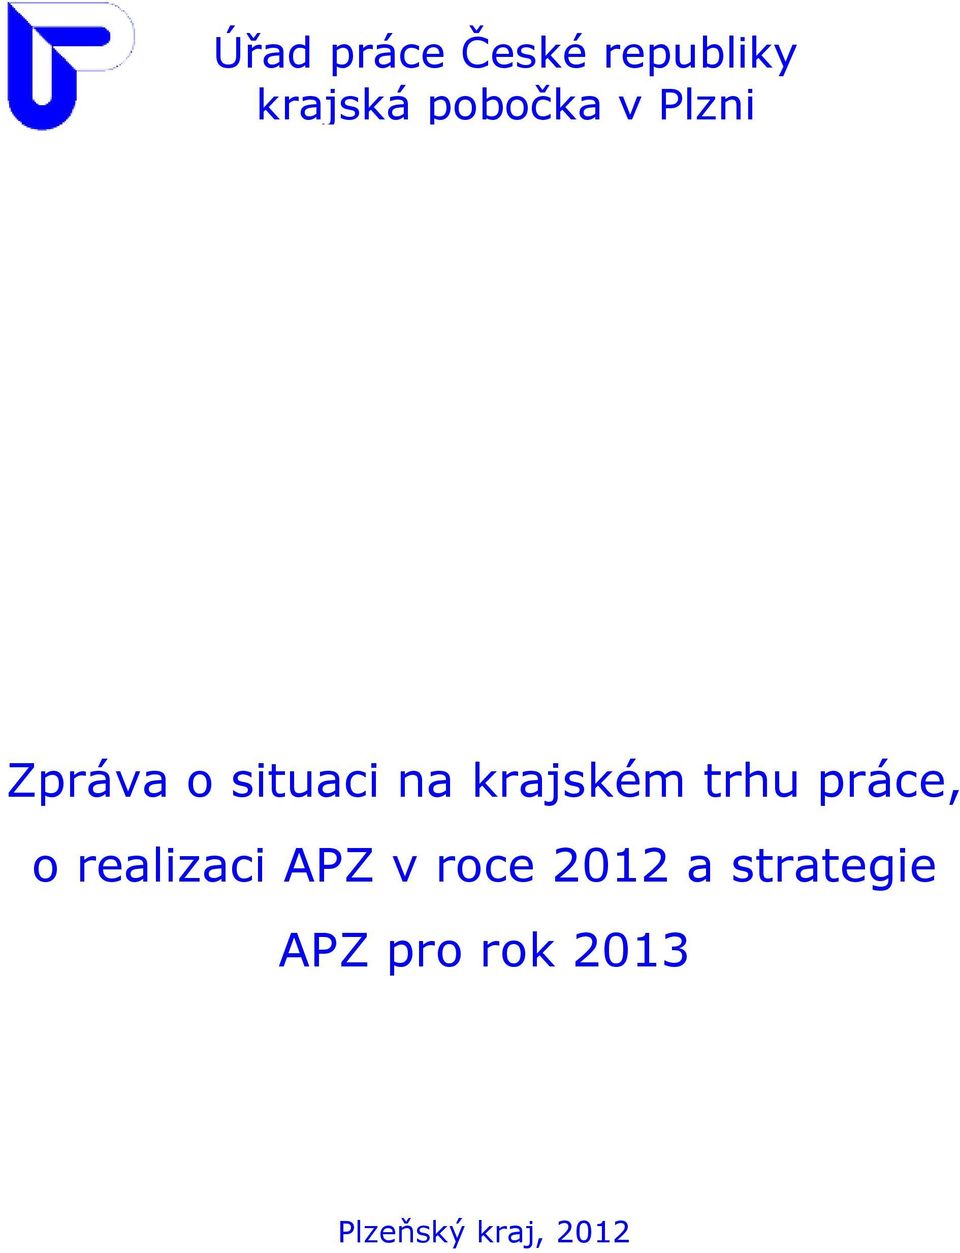 roce 2012 a strategie APZ pro